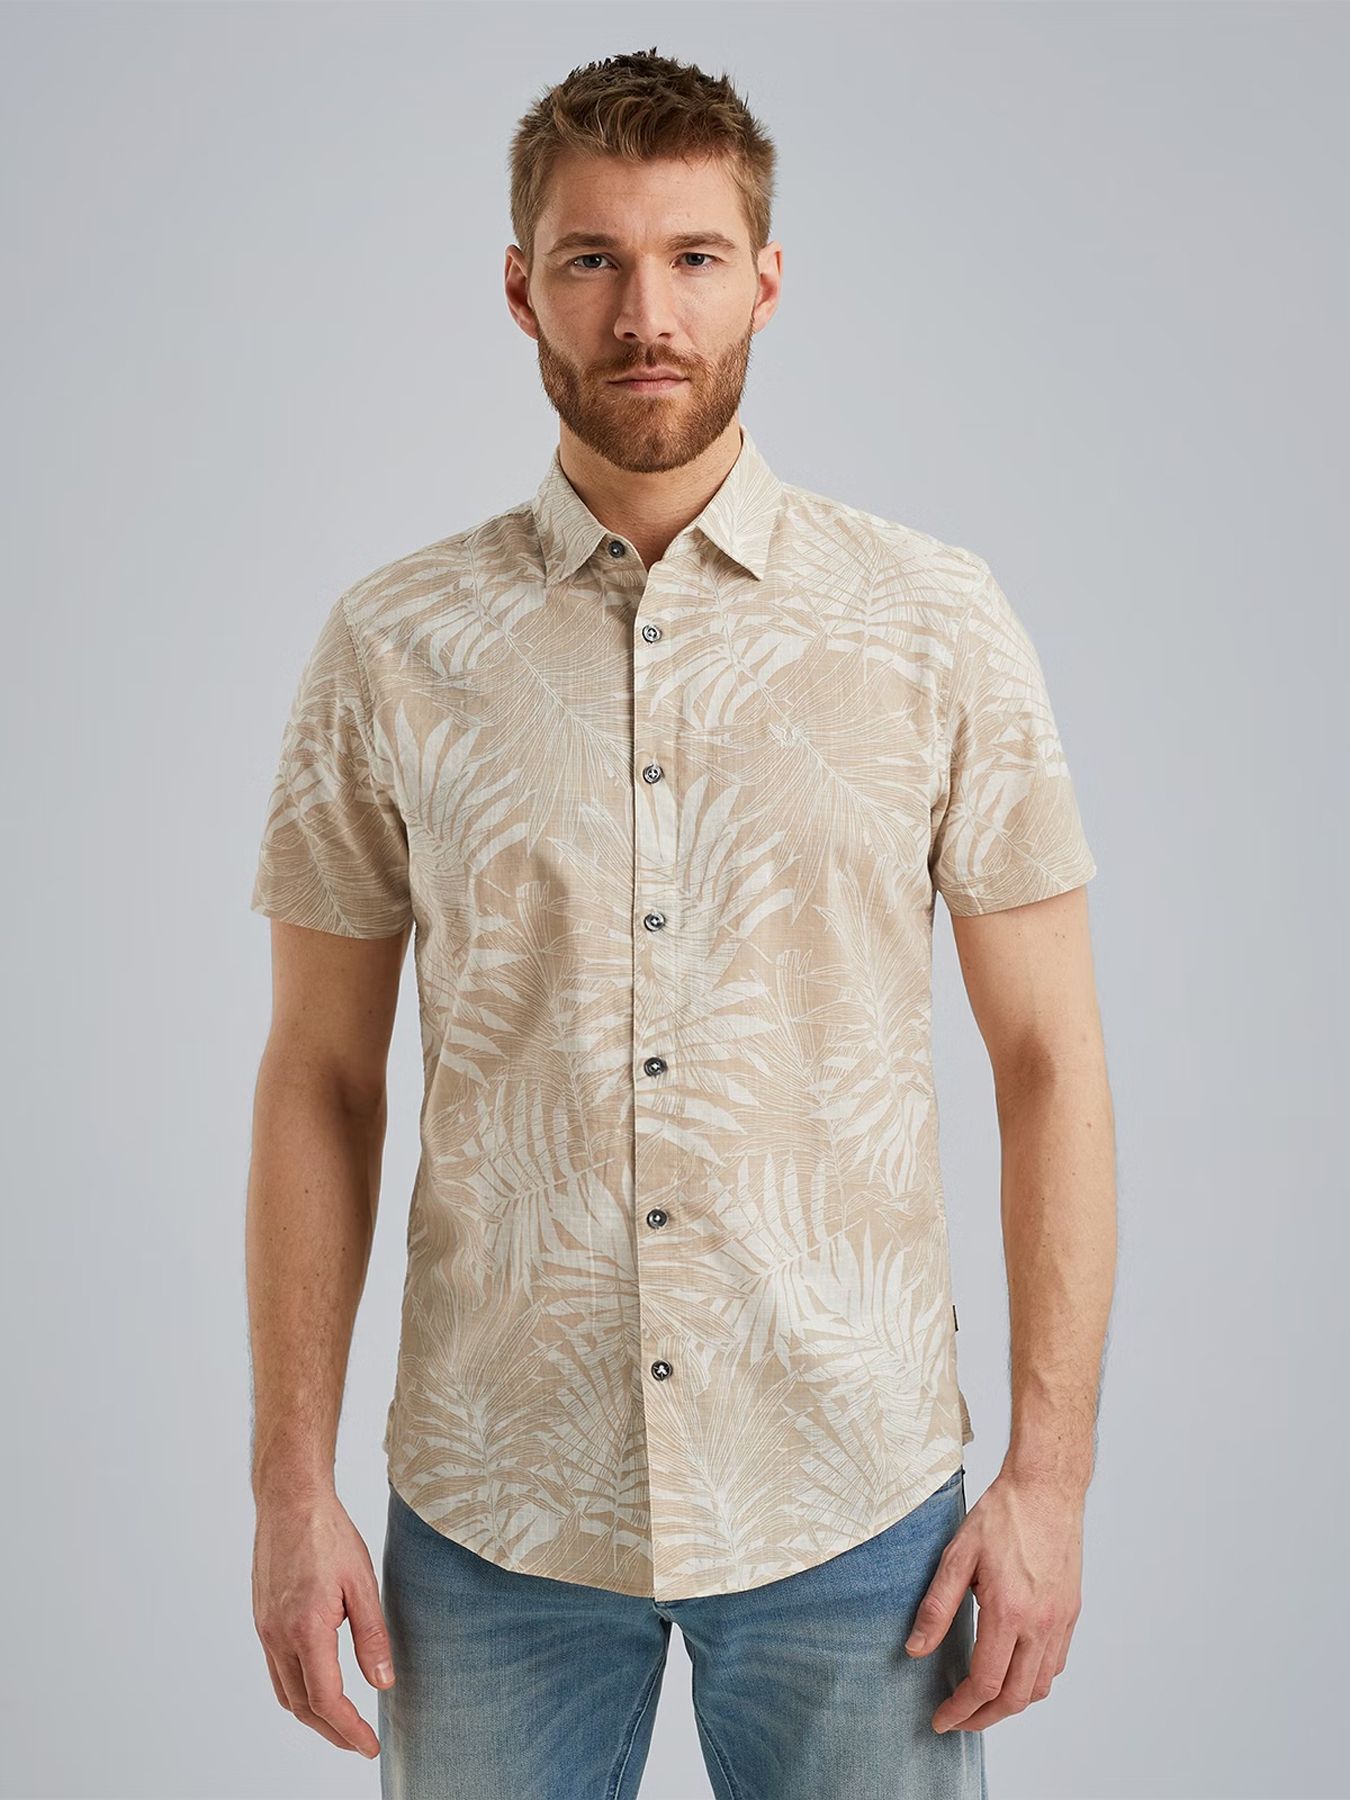 Short Sleeve Shirt Print On Ctn Sl